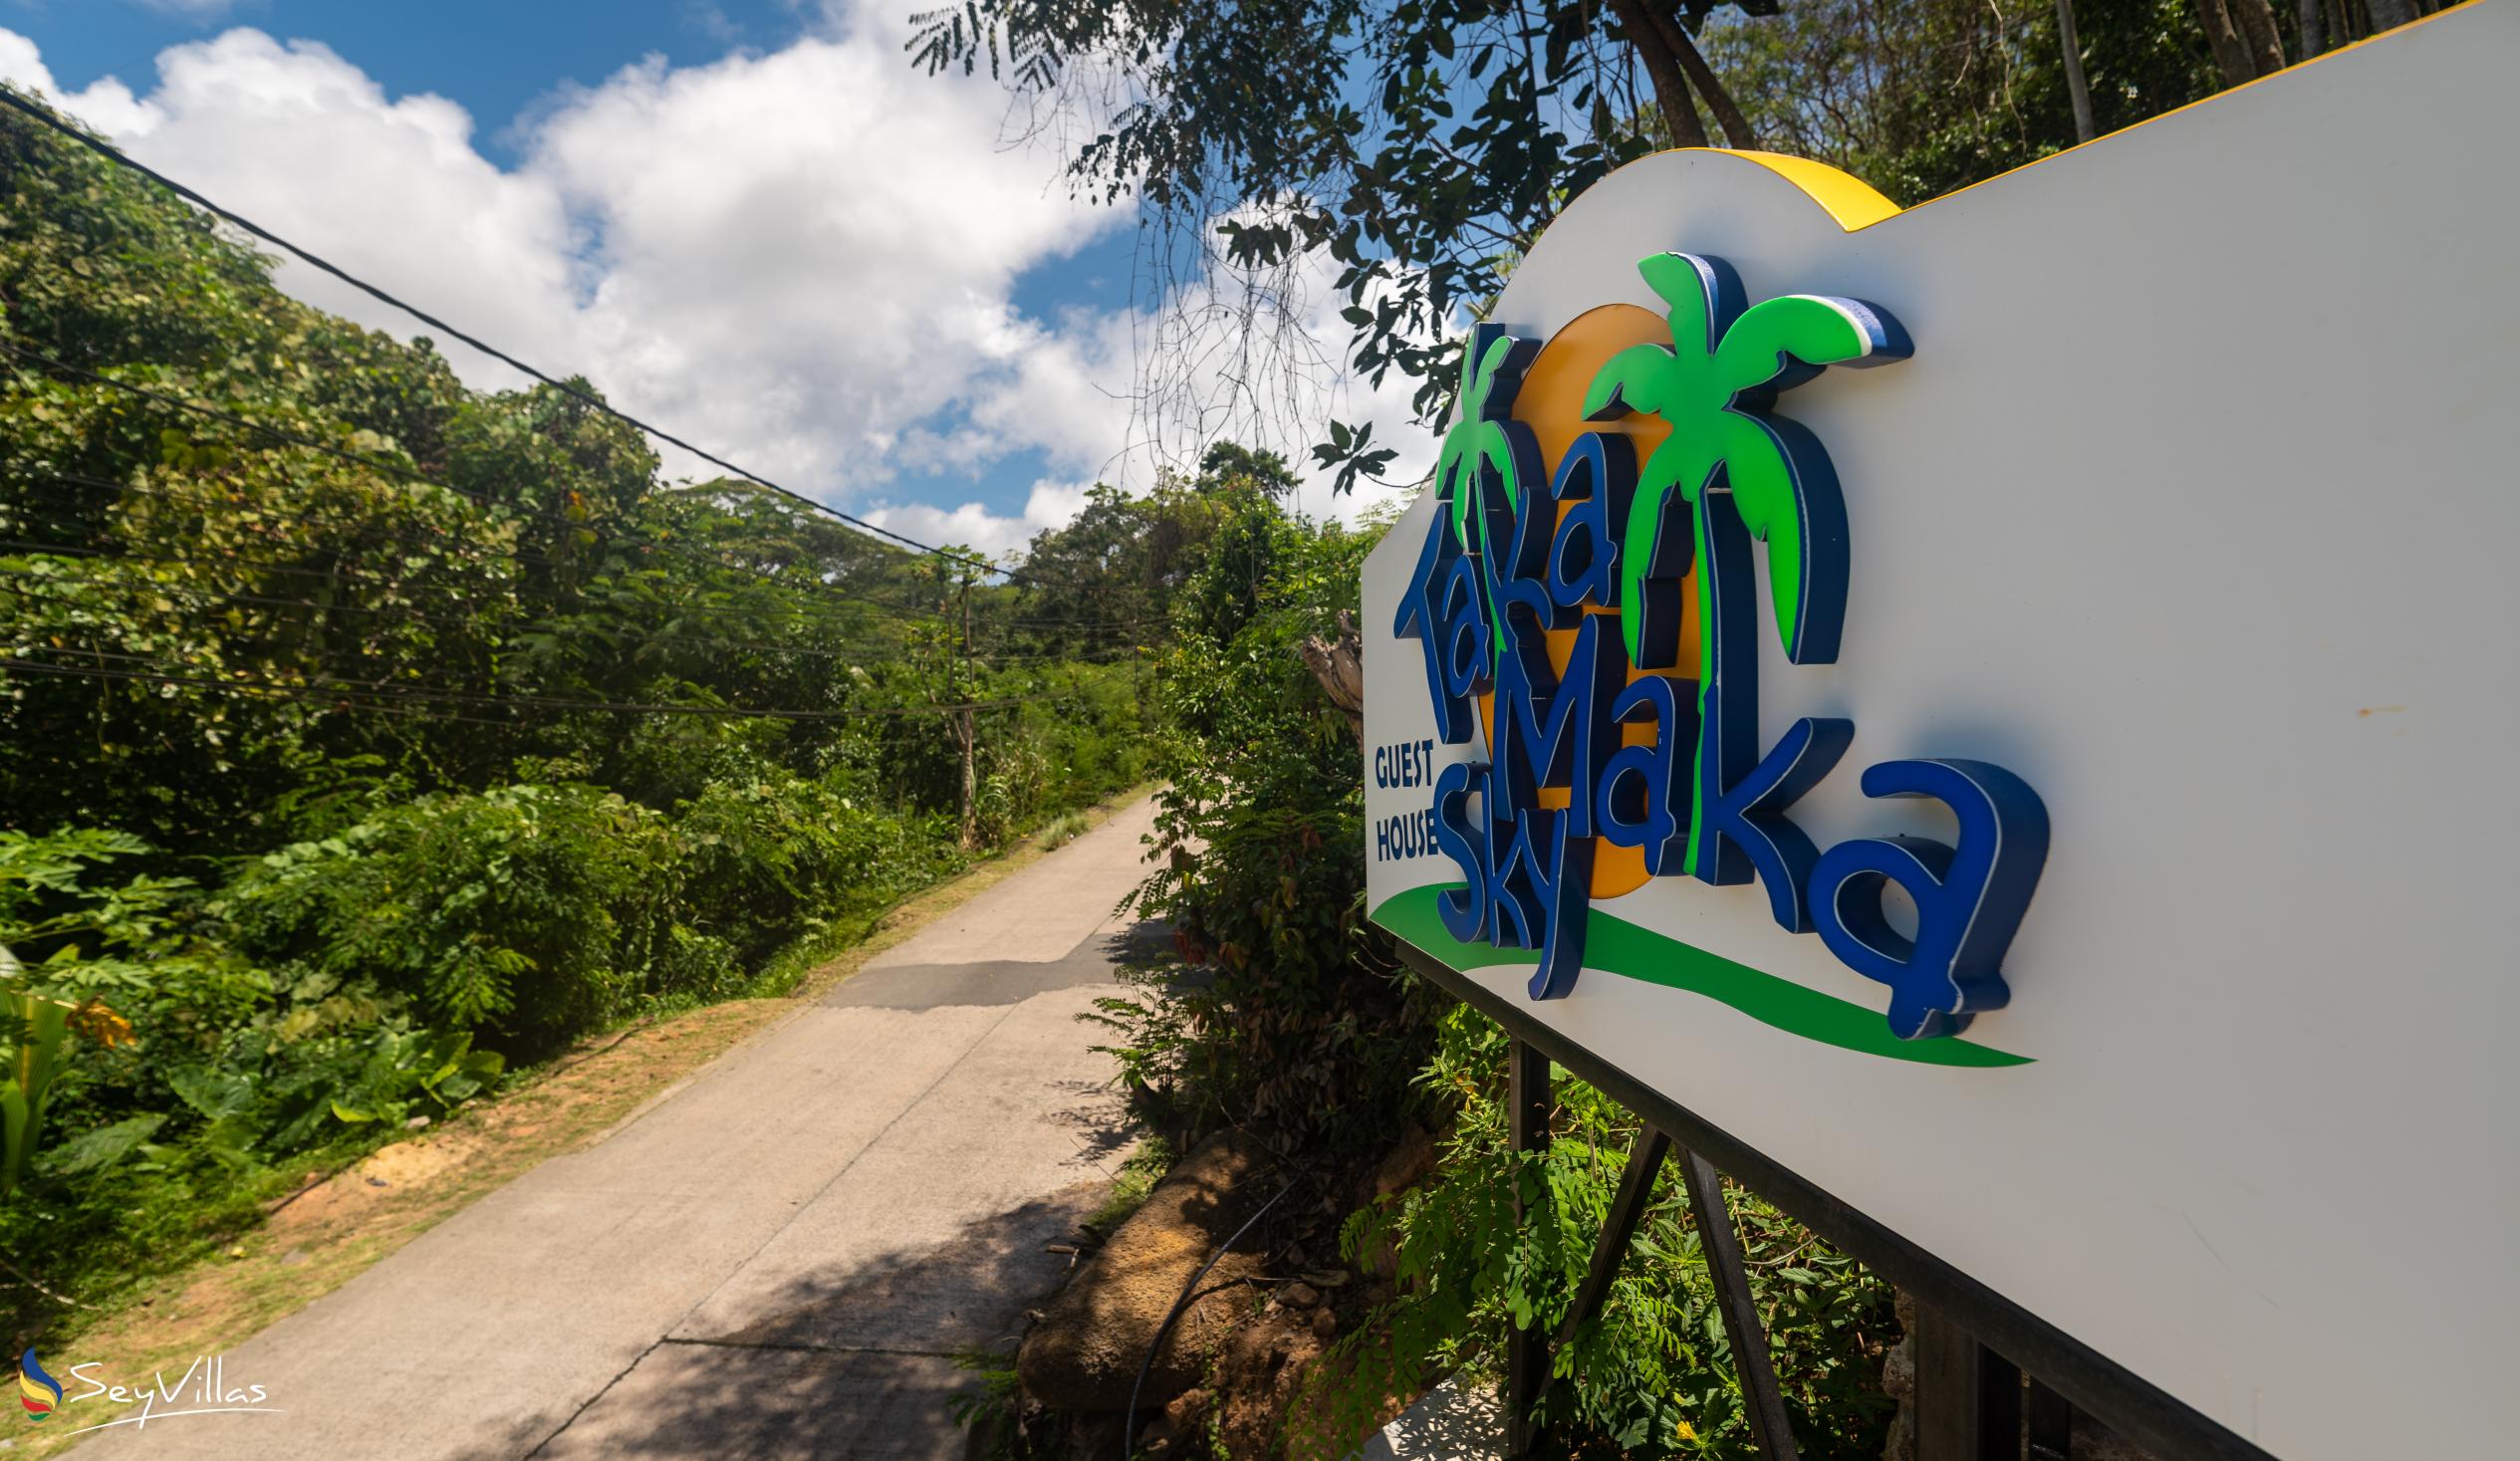 Photo 19: Takamaka Sky Villas - Outdoor area - Mahé (Seychelles)